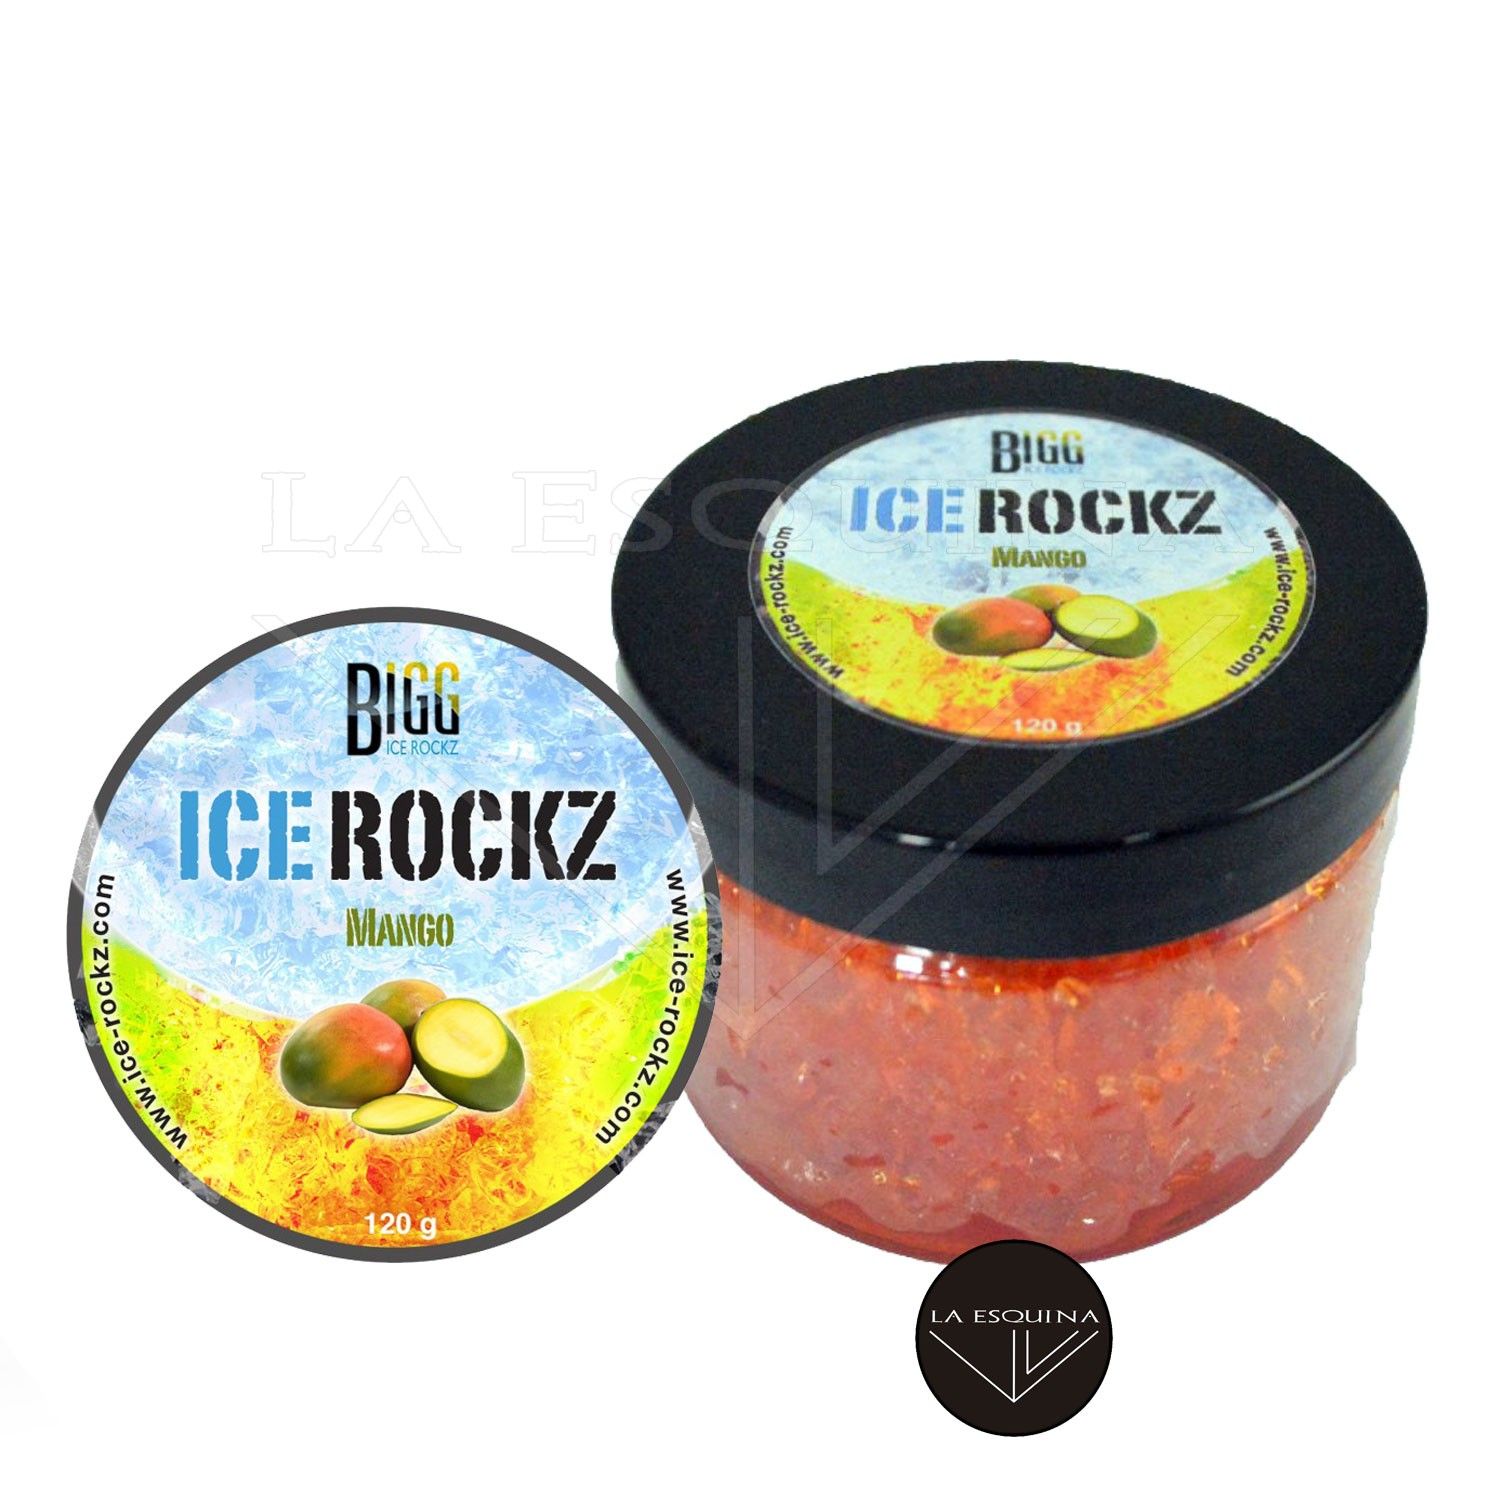 Gel Rock de Cachimba BIGG ICE ROCKZ – 120 g. – Mango